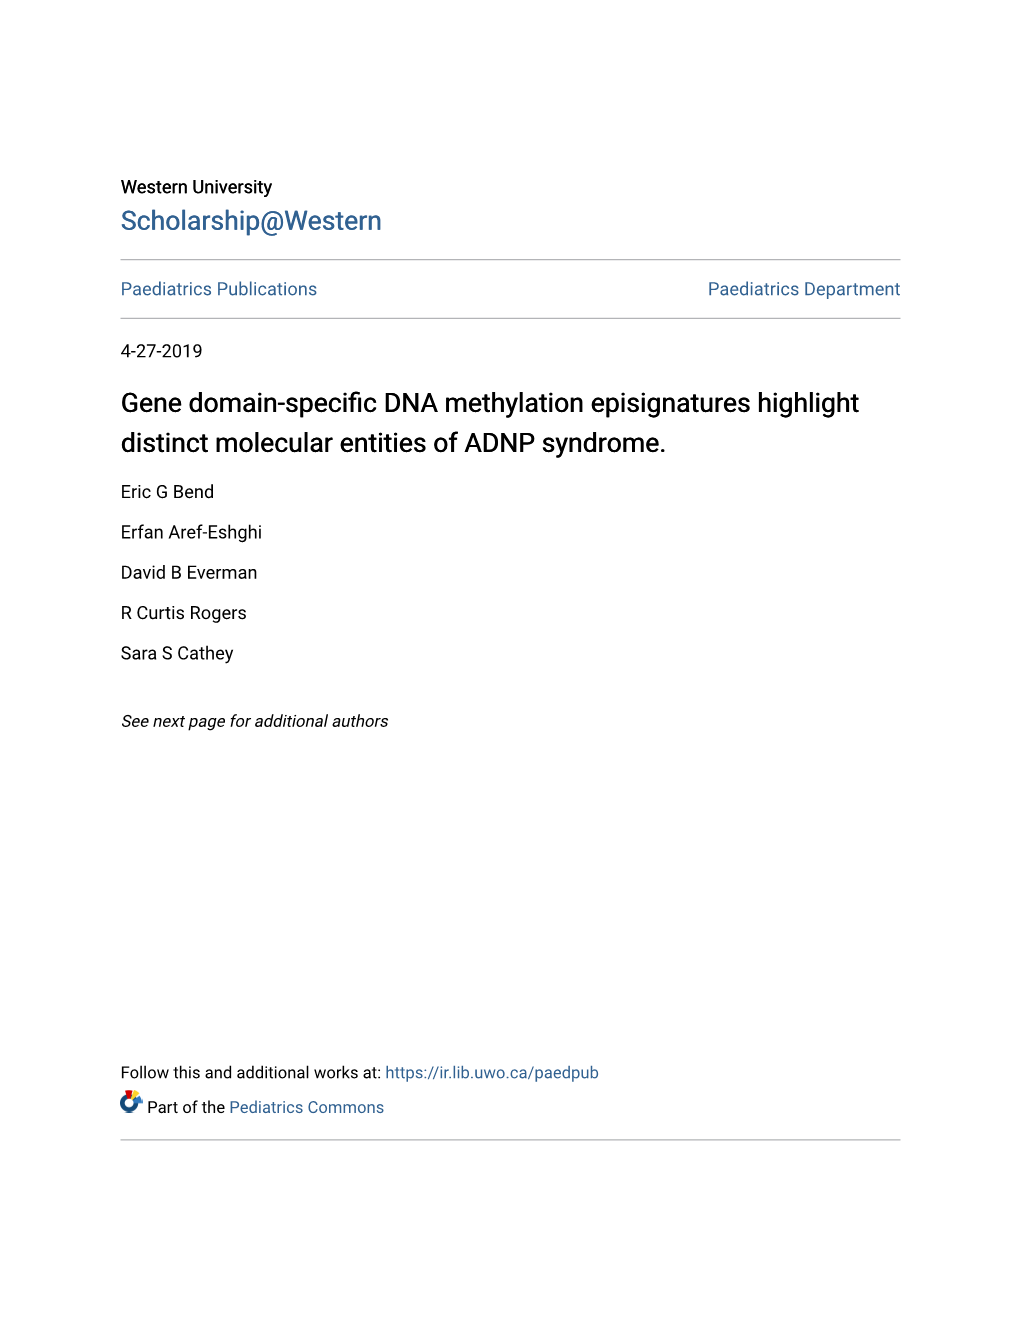 Gene Domain-Specific DNA Methylation Episignatures Highlight Distinct Molecular Entities of ADNP Syndrome